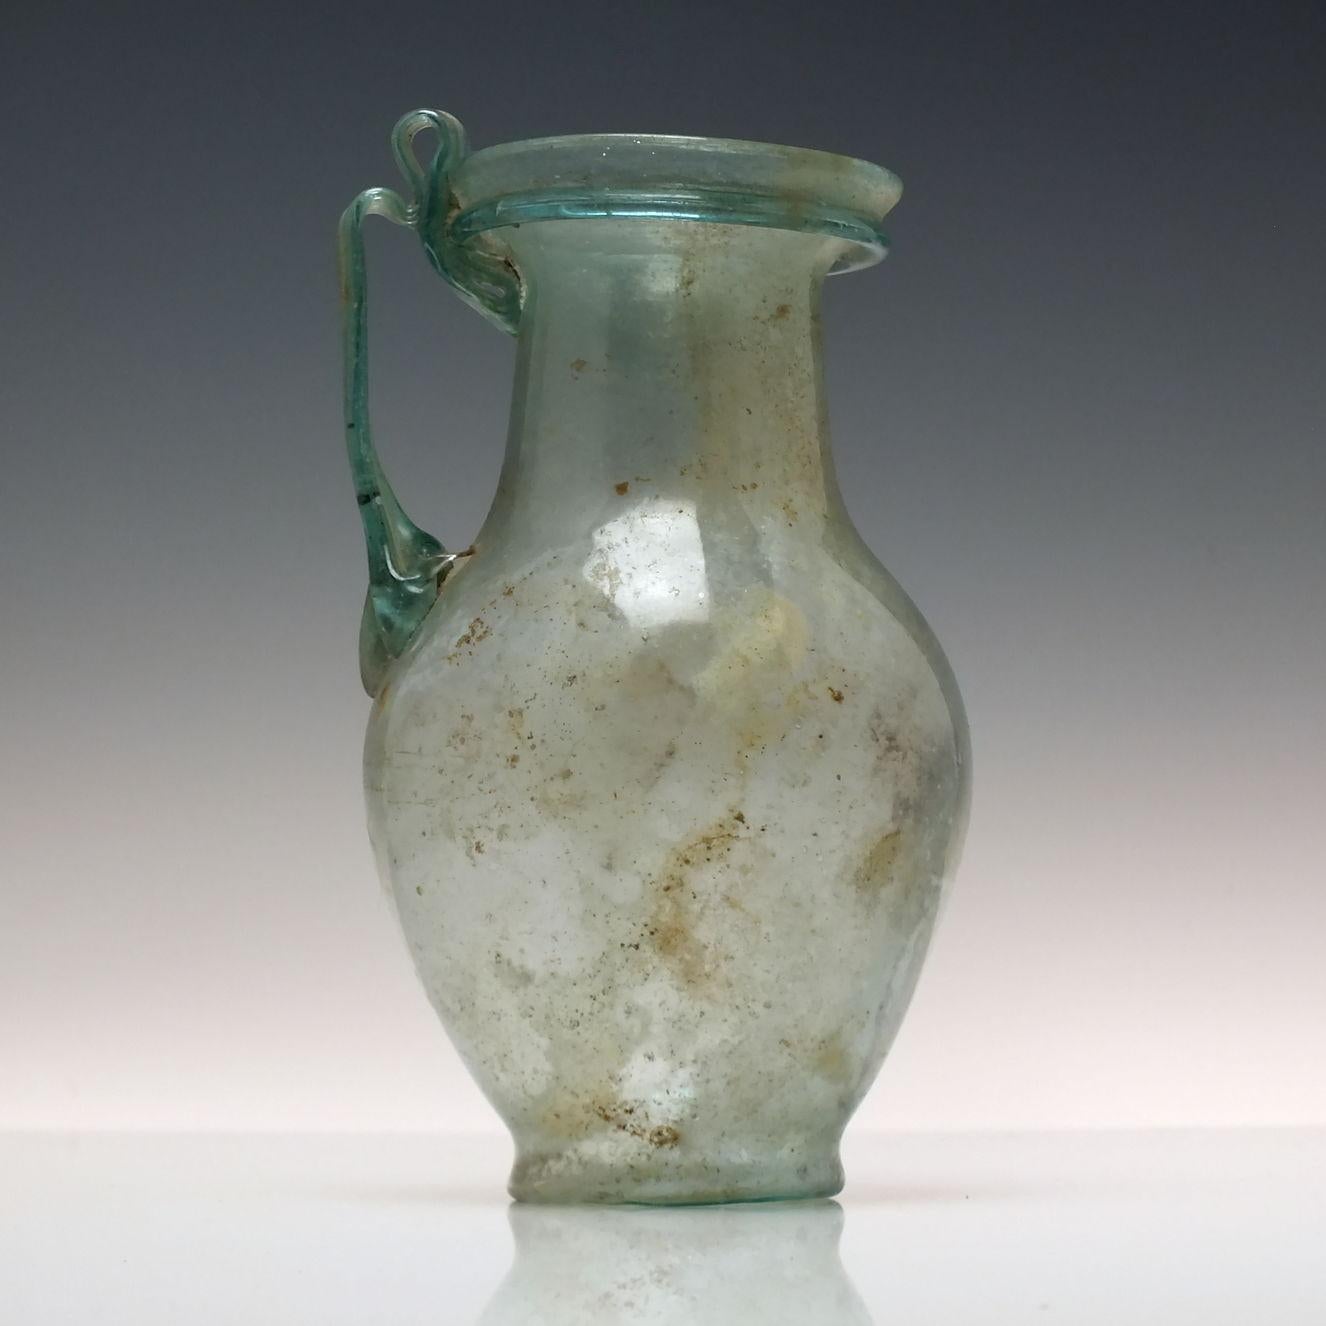 European Large Ancient Roman Blue Glass Jug 1st - 2nd Century CE